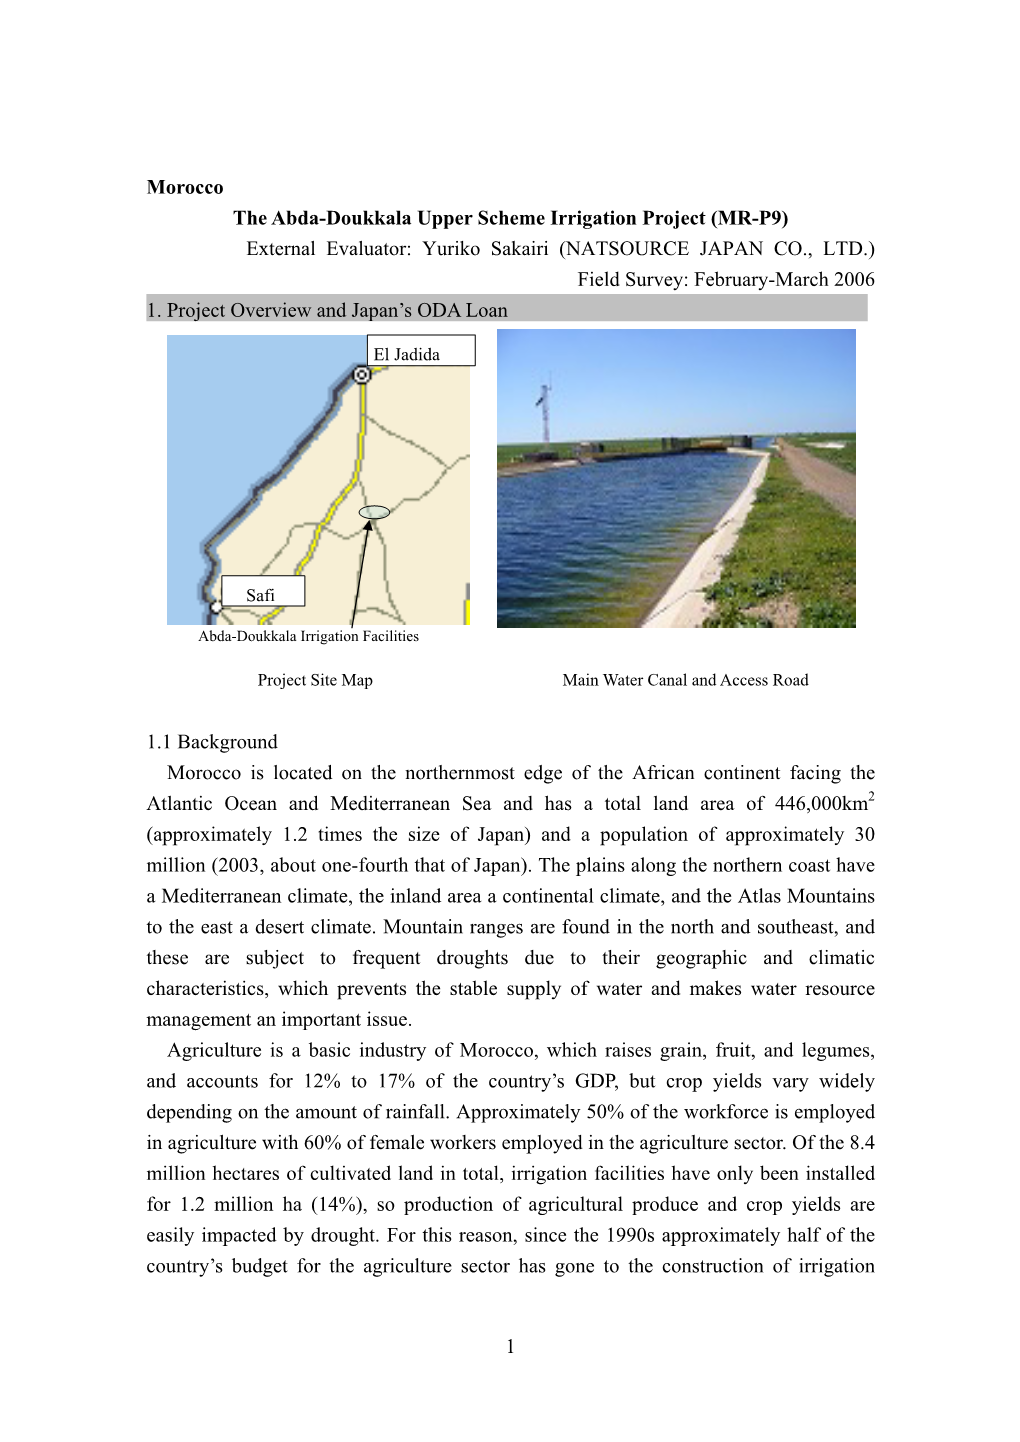 Morocco the Abda-Doukkala Upper Scheme Irrigation Project (MR-P9) External Evaluator: Yuriko Sakairi (NATSOURCE JAPAN CO., LTD.) Field Survey: February-March 2006 1